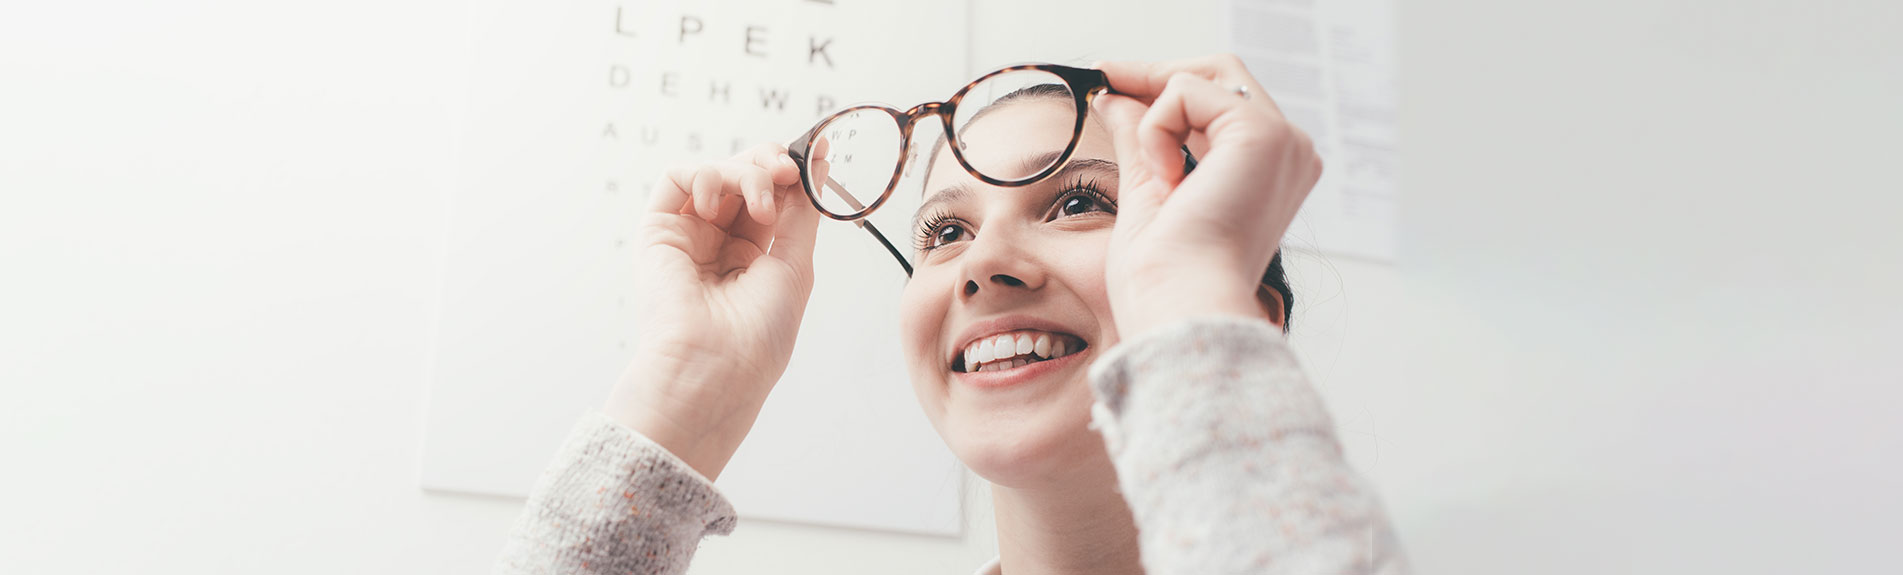 Guest Blog: Eye Care Tips For Basic Eye Health And Hygiene